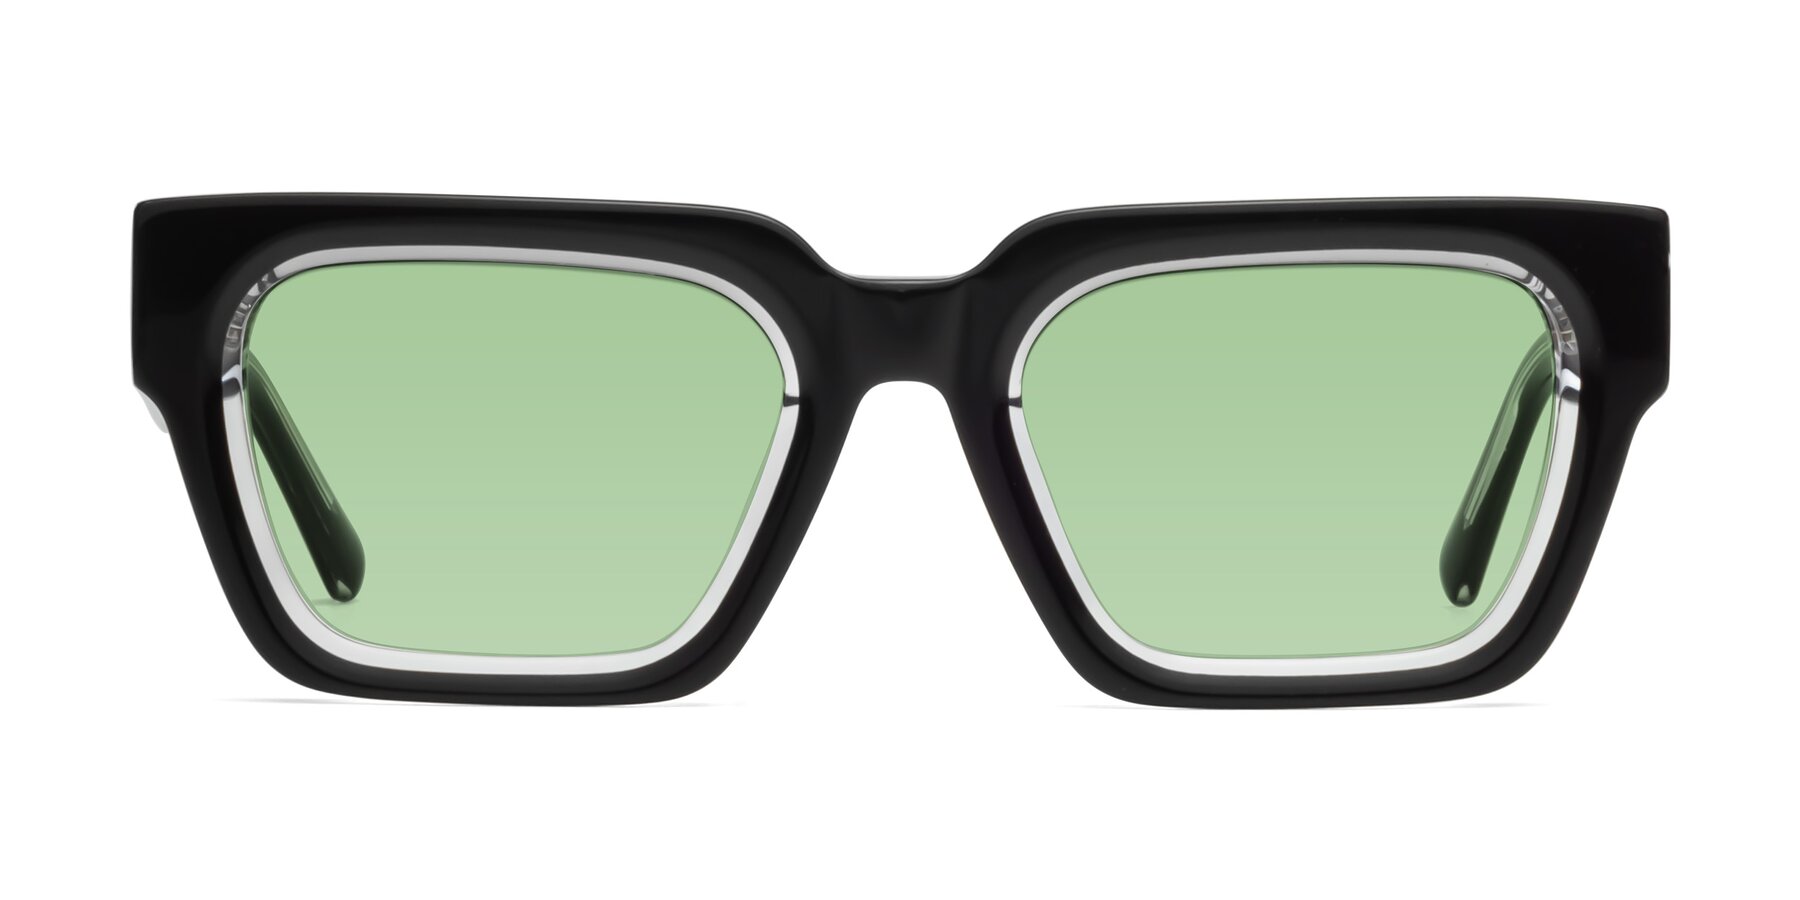 Hardy - Black / Clear Sunglasses